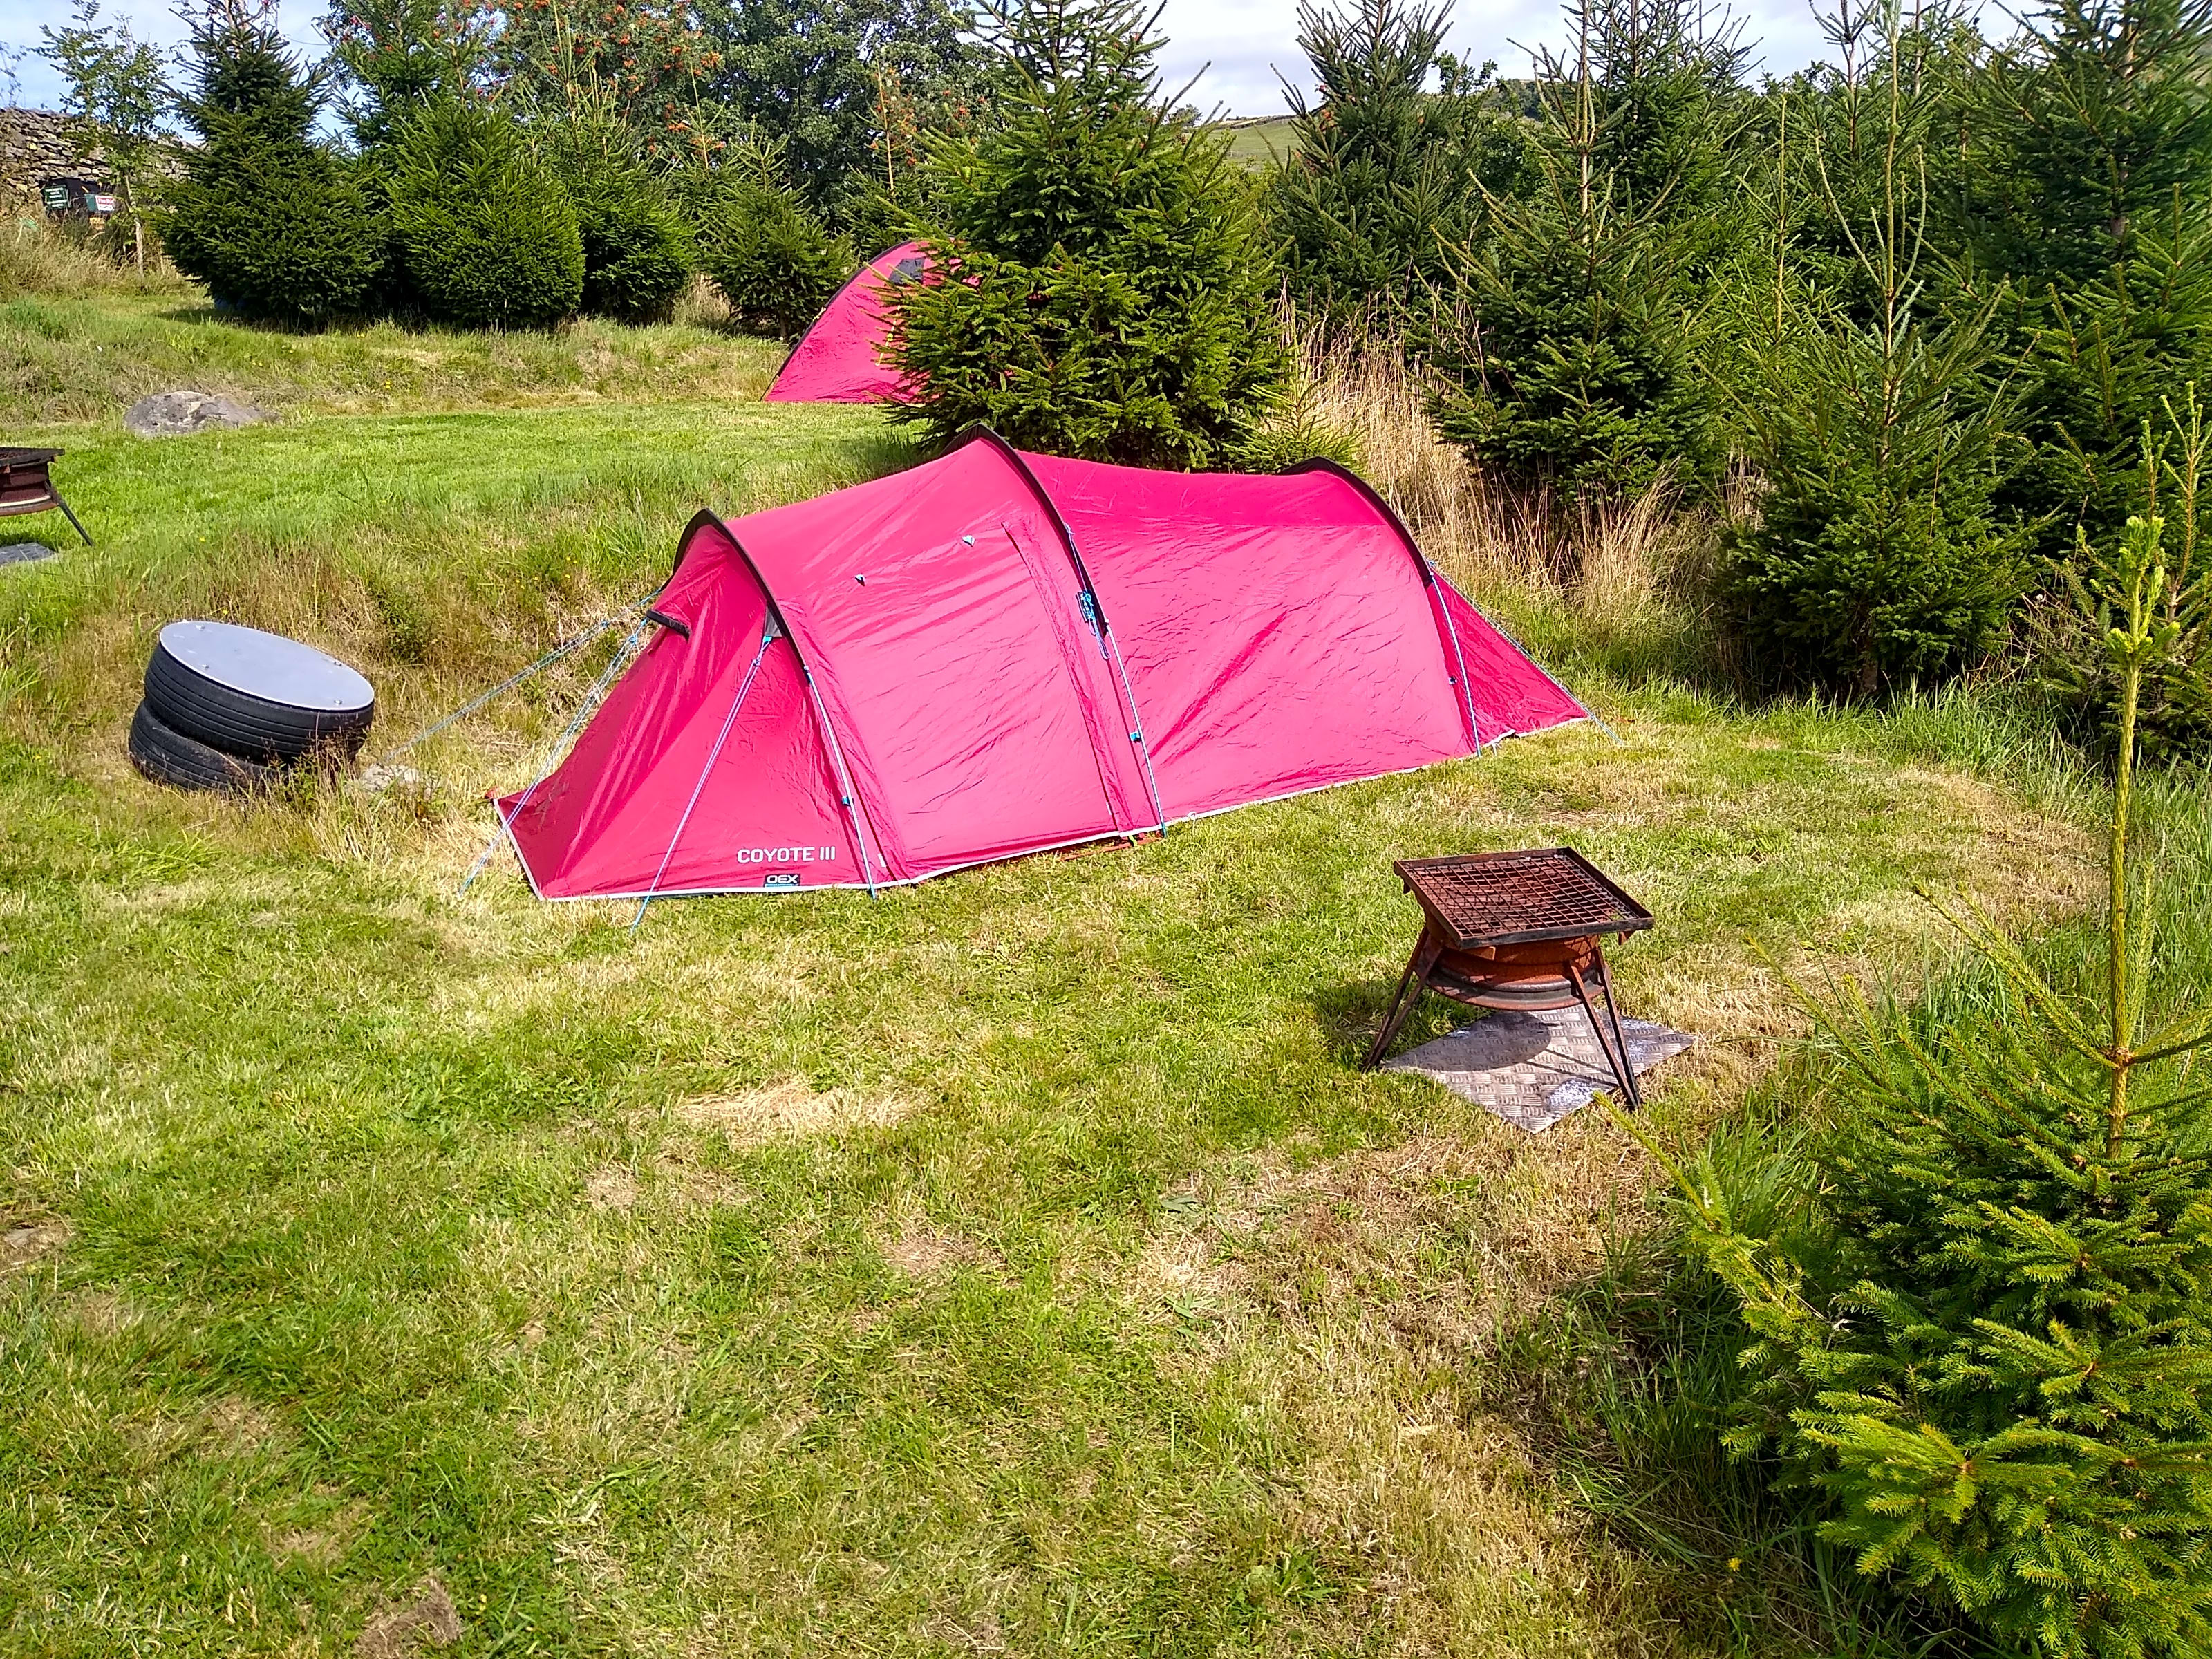 Ings Kippers Campsite and Shepherd's Hut, Windermere, Cumbria